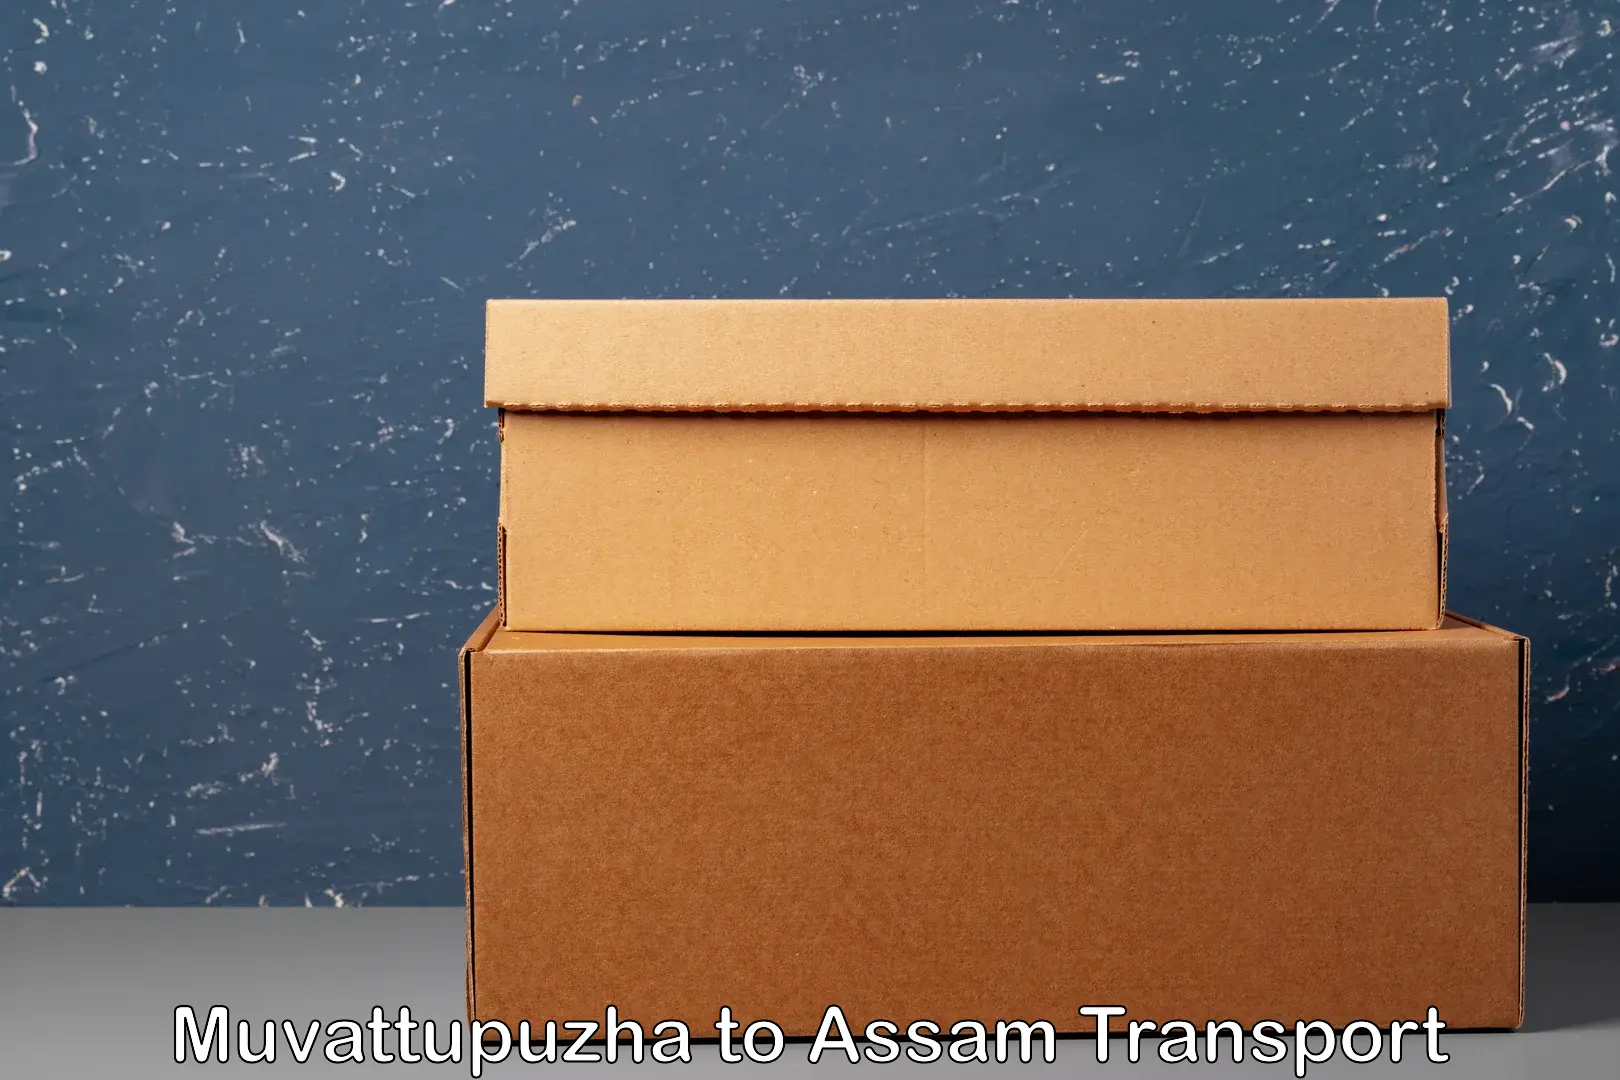 Sending bike to another city Muvattupuzha to Assam